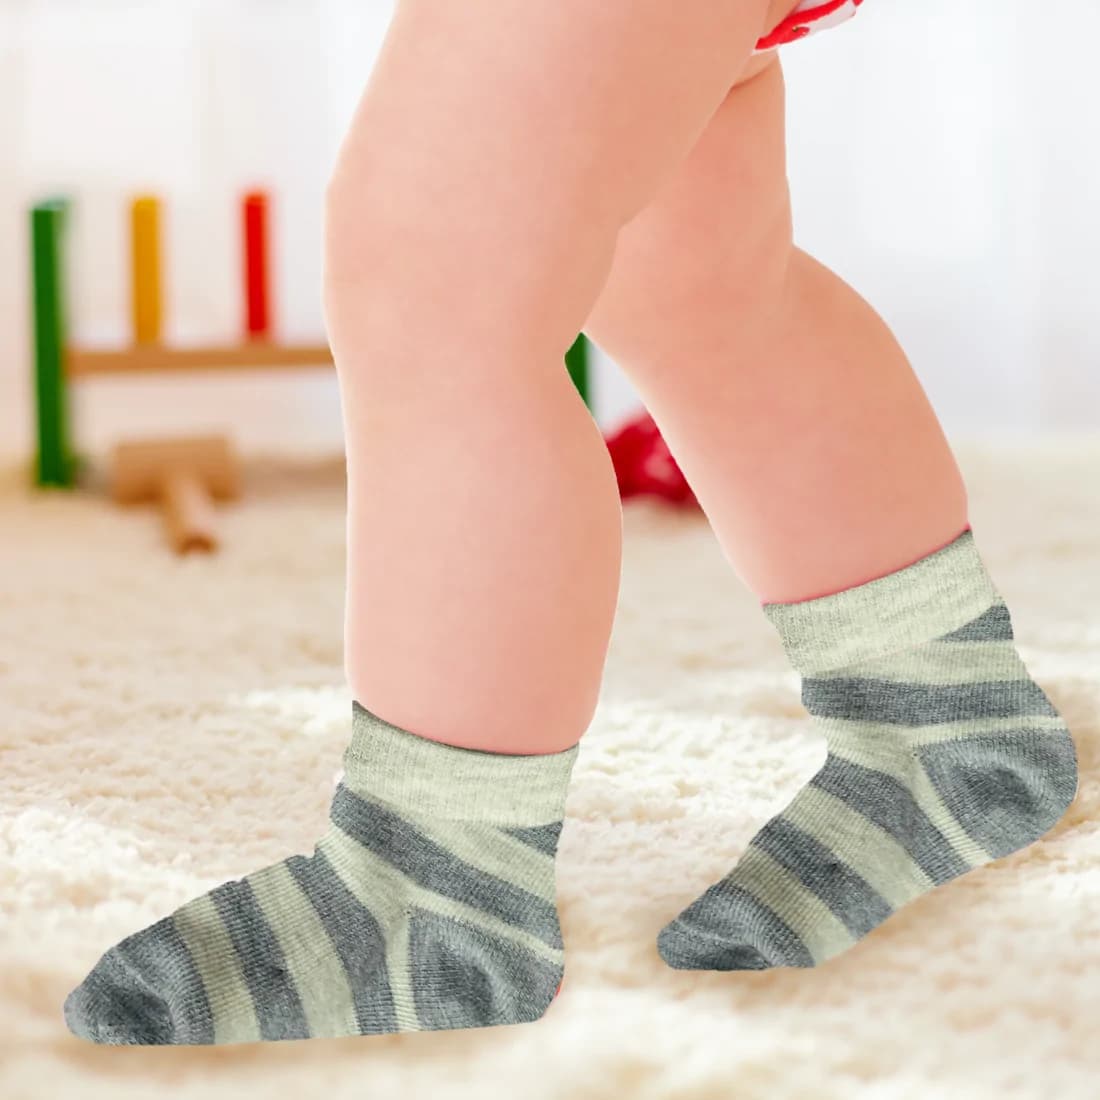 Baby Socks 0-6 Months | Elasticated & Antibacterial | Breathable, Shrinkable, Sweat & Wear Resistant | Unisex Grey Striped & Solid | Pack of 3